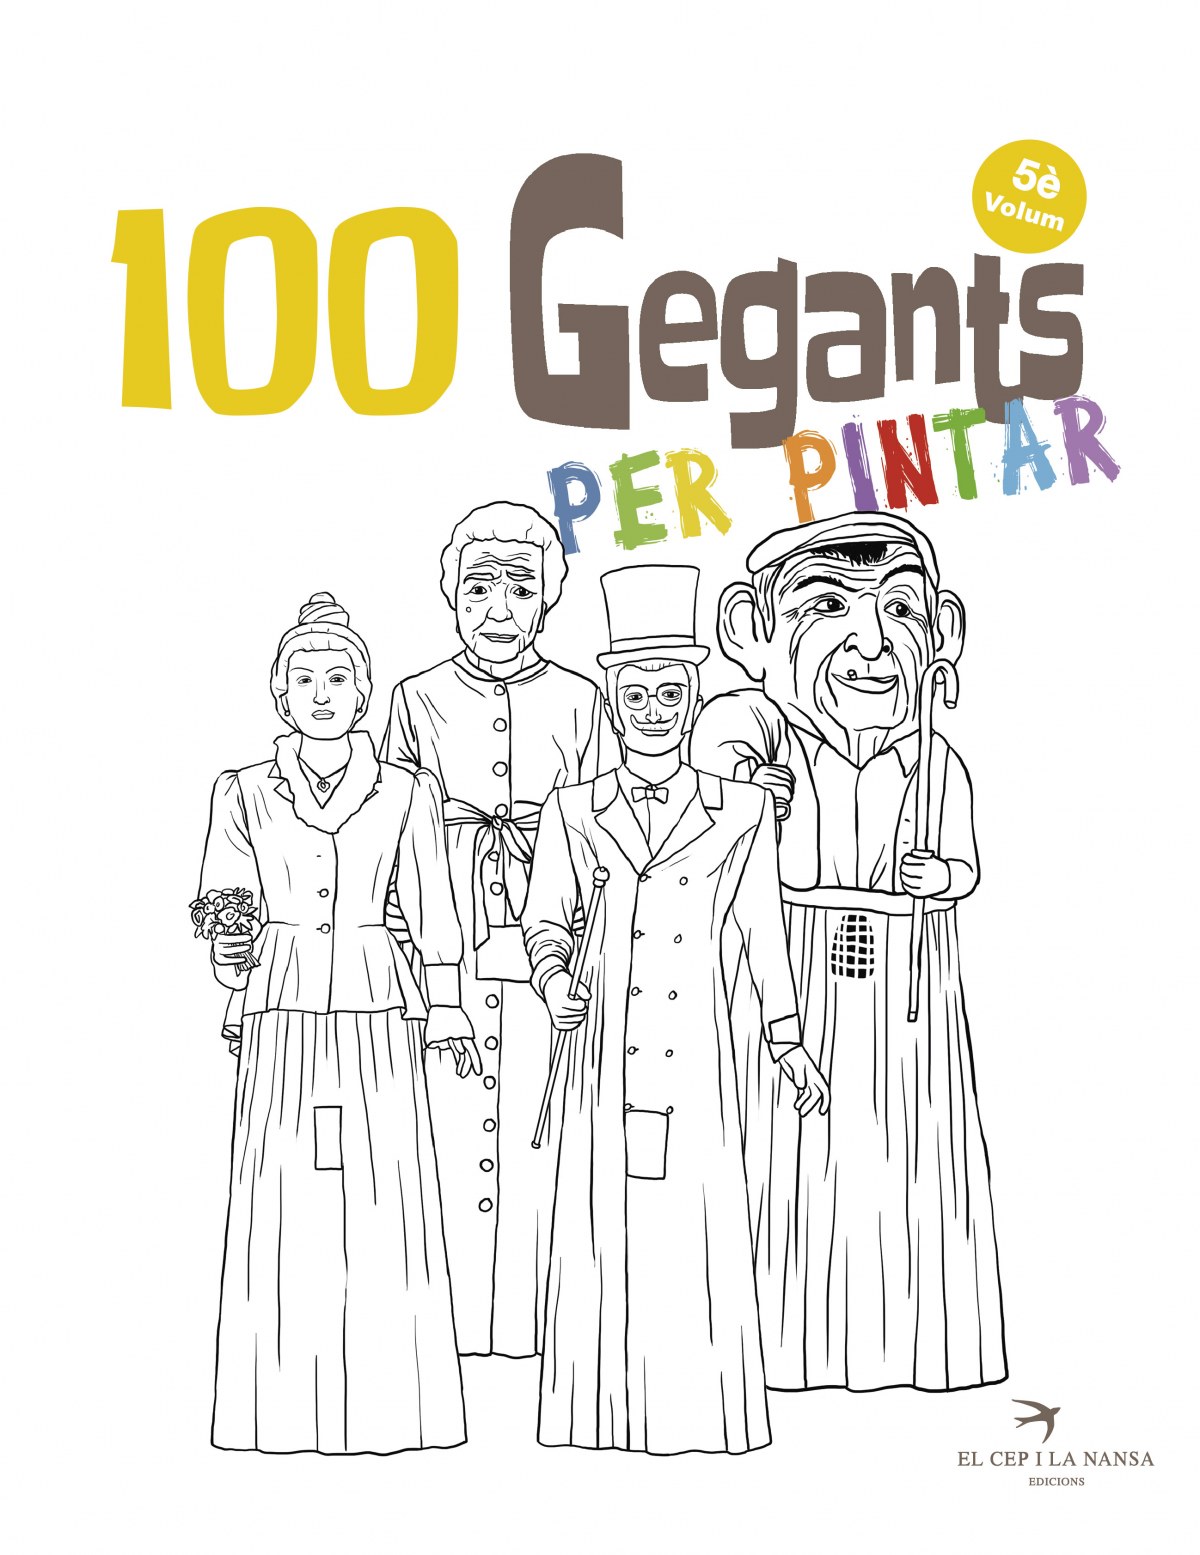 100 gegants per pintar - Ortega Bolivar, Juan